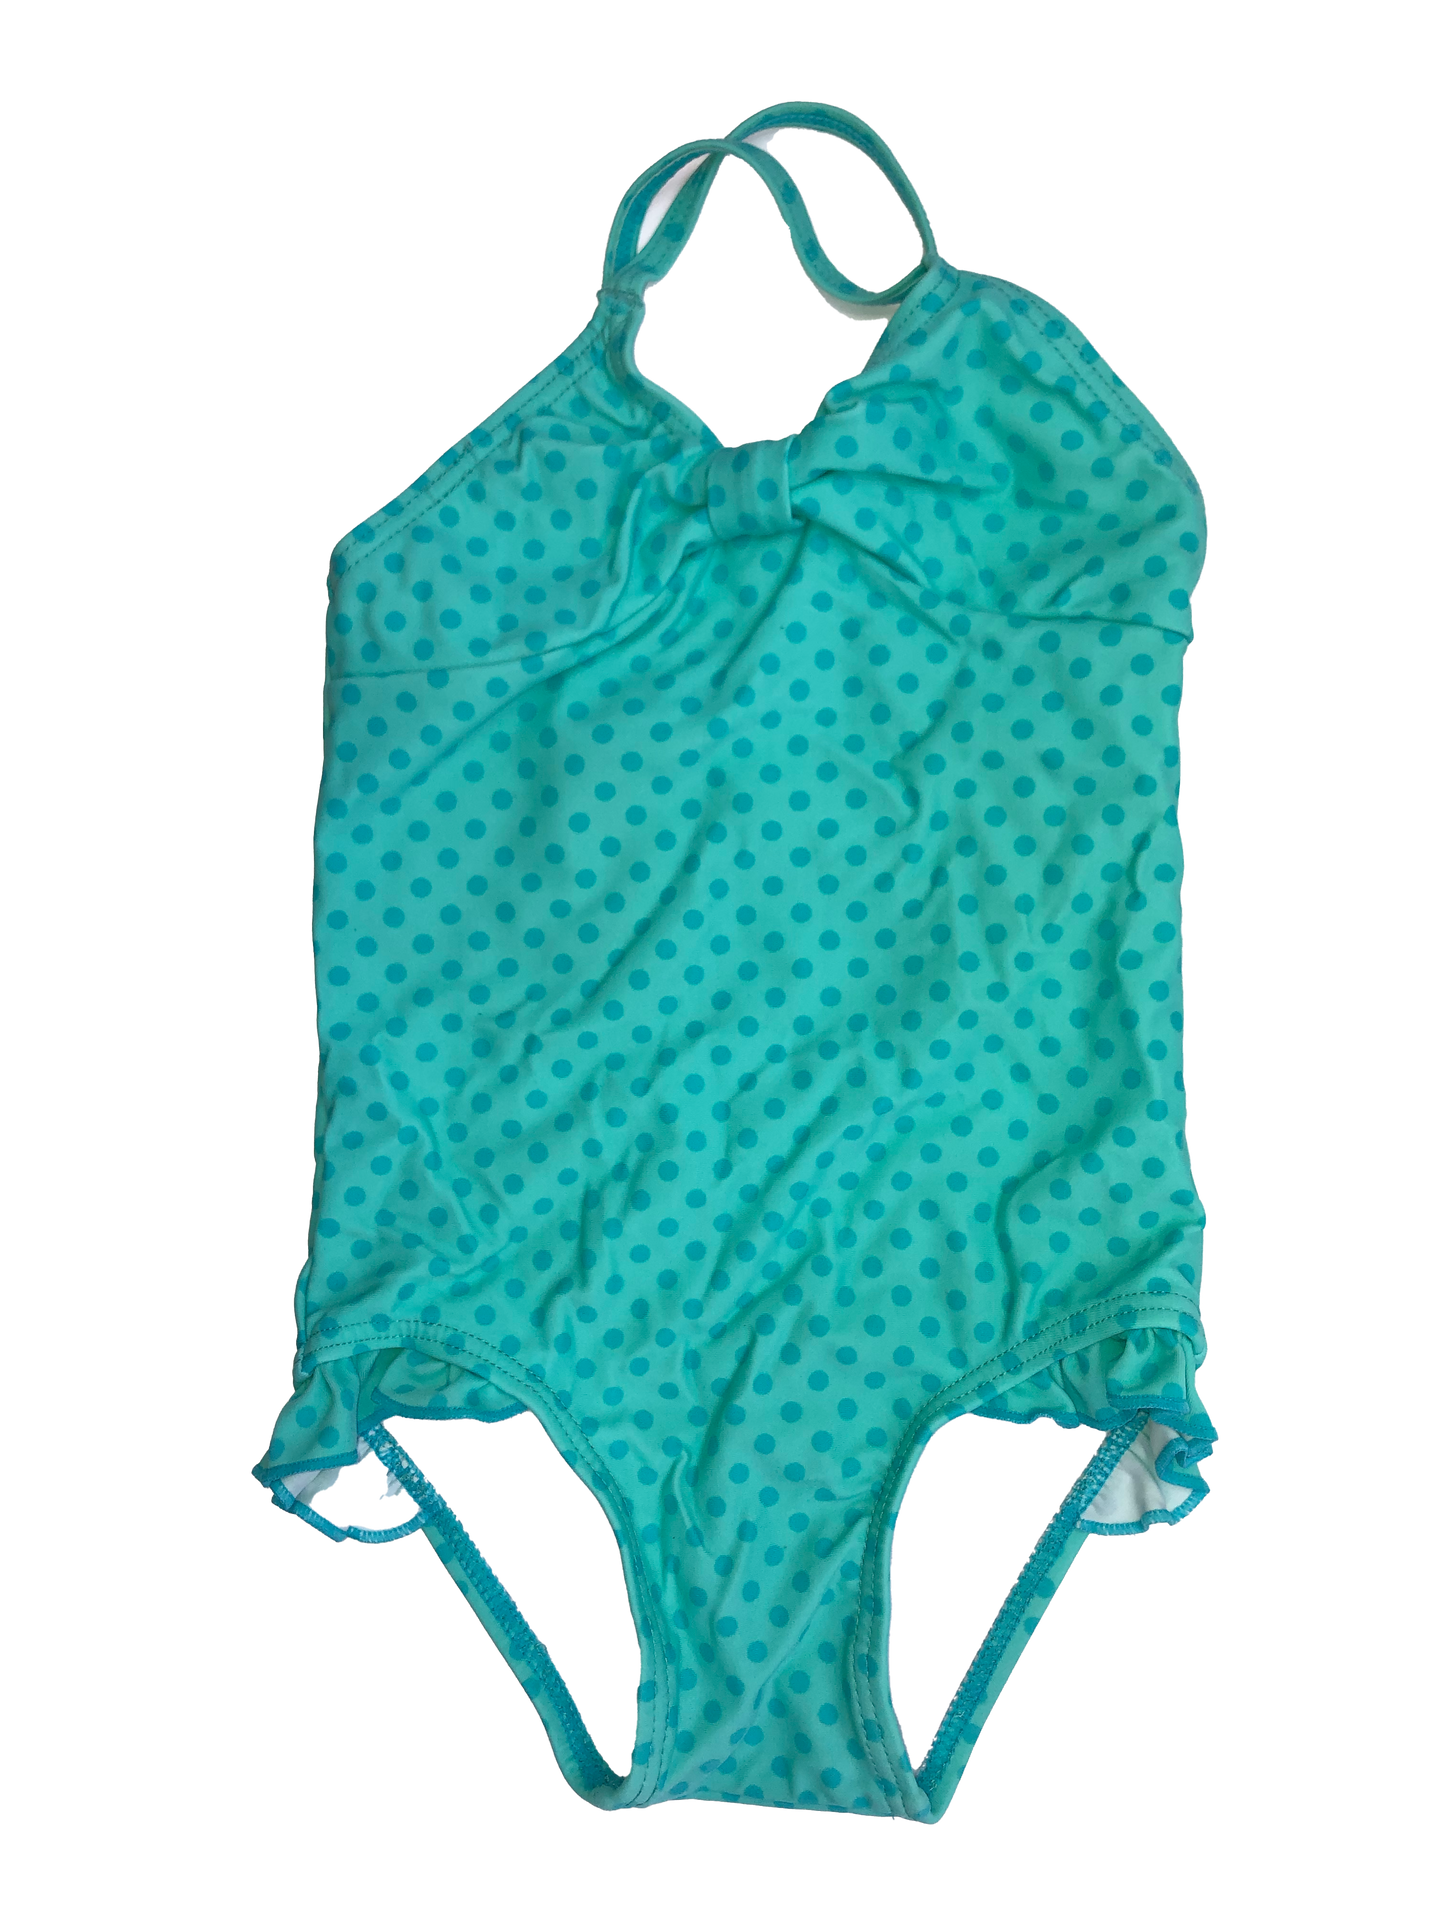 Joe Fresh Turquoise Swimsuit with Polka Dots 18-24M